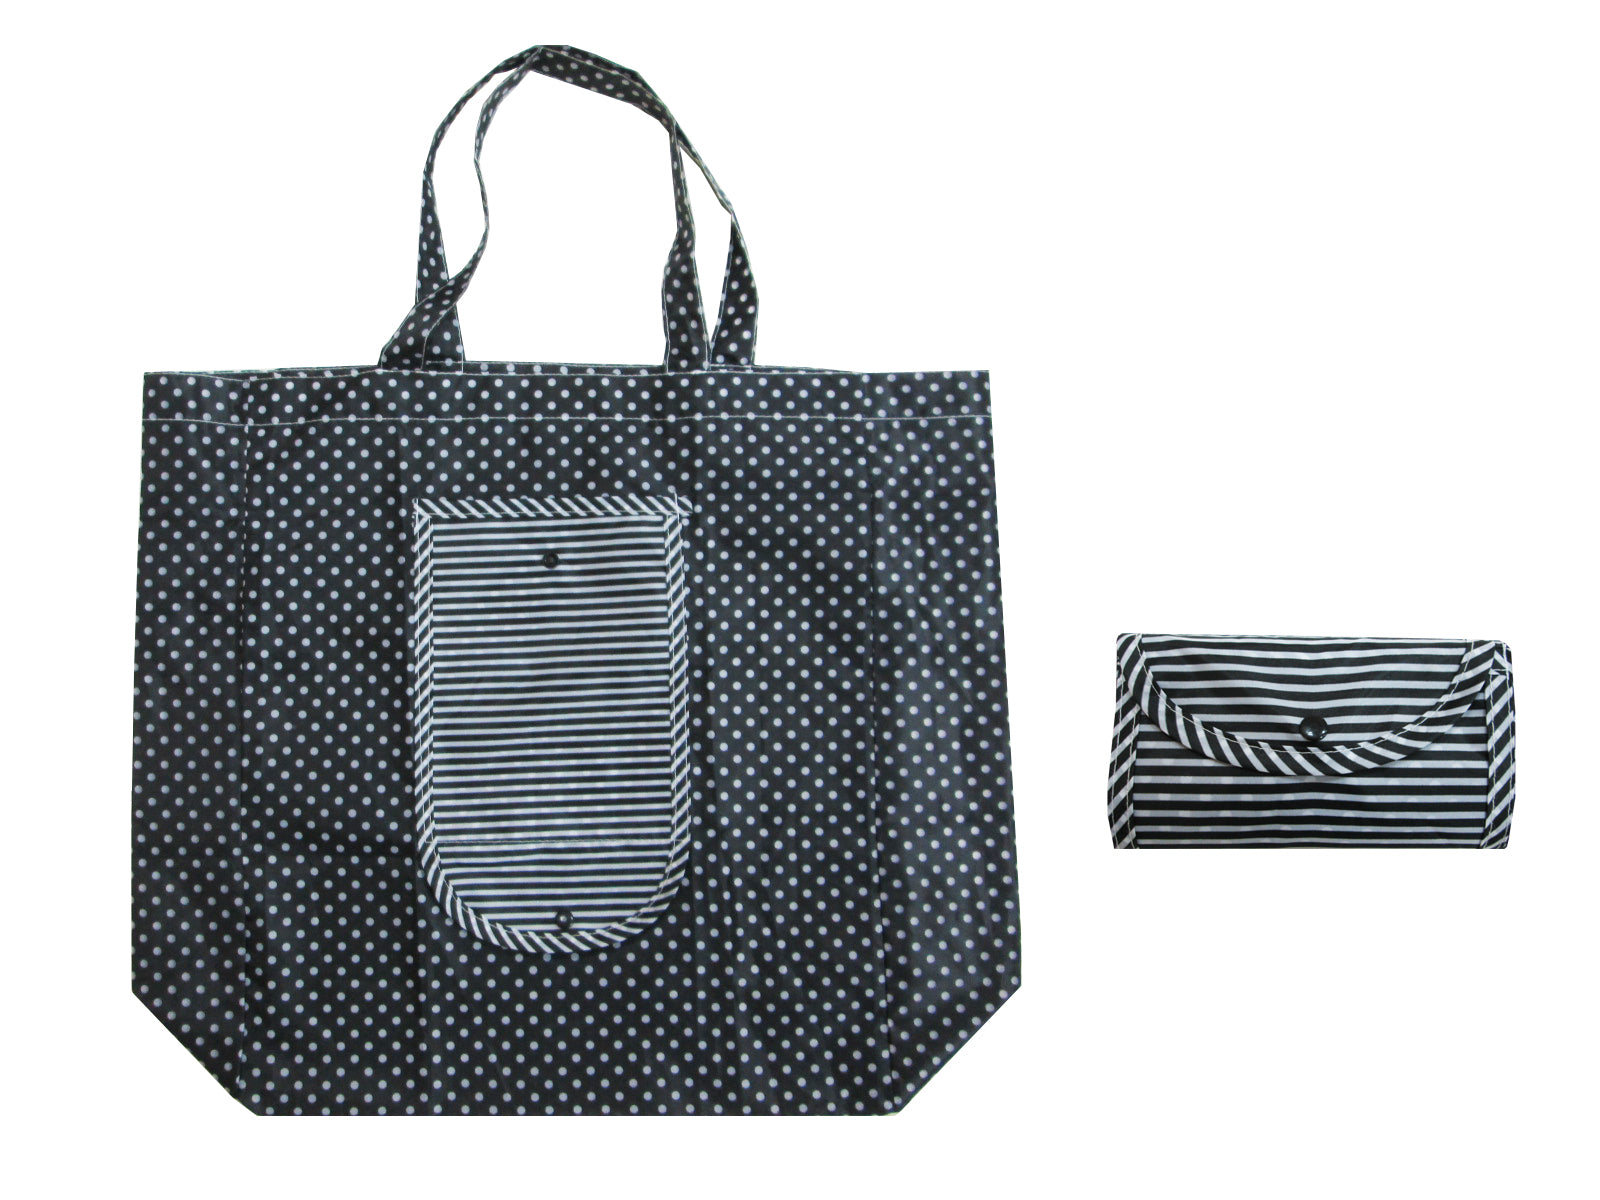 JLSP-0011 Shopping Bag